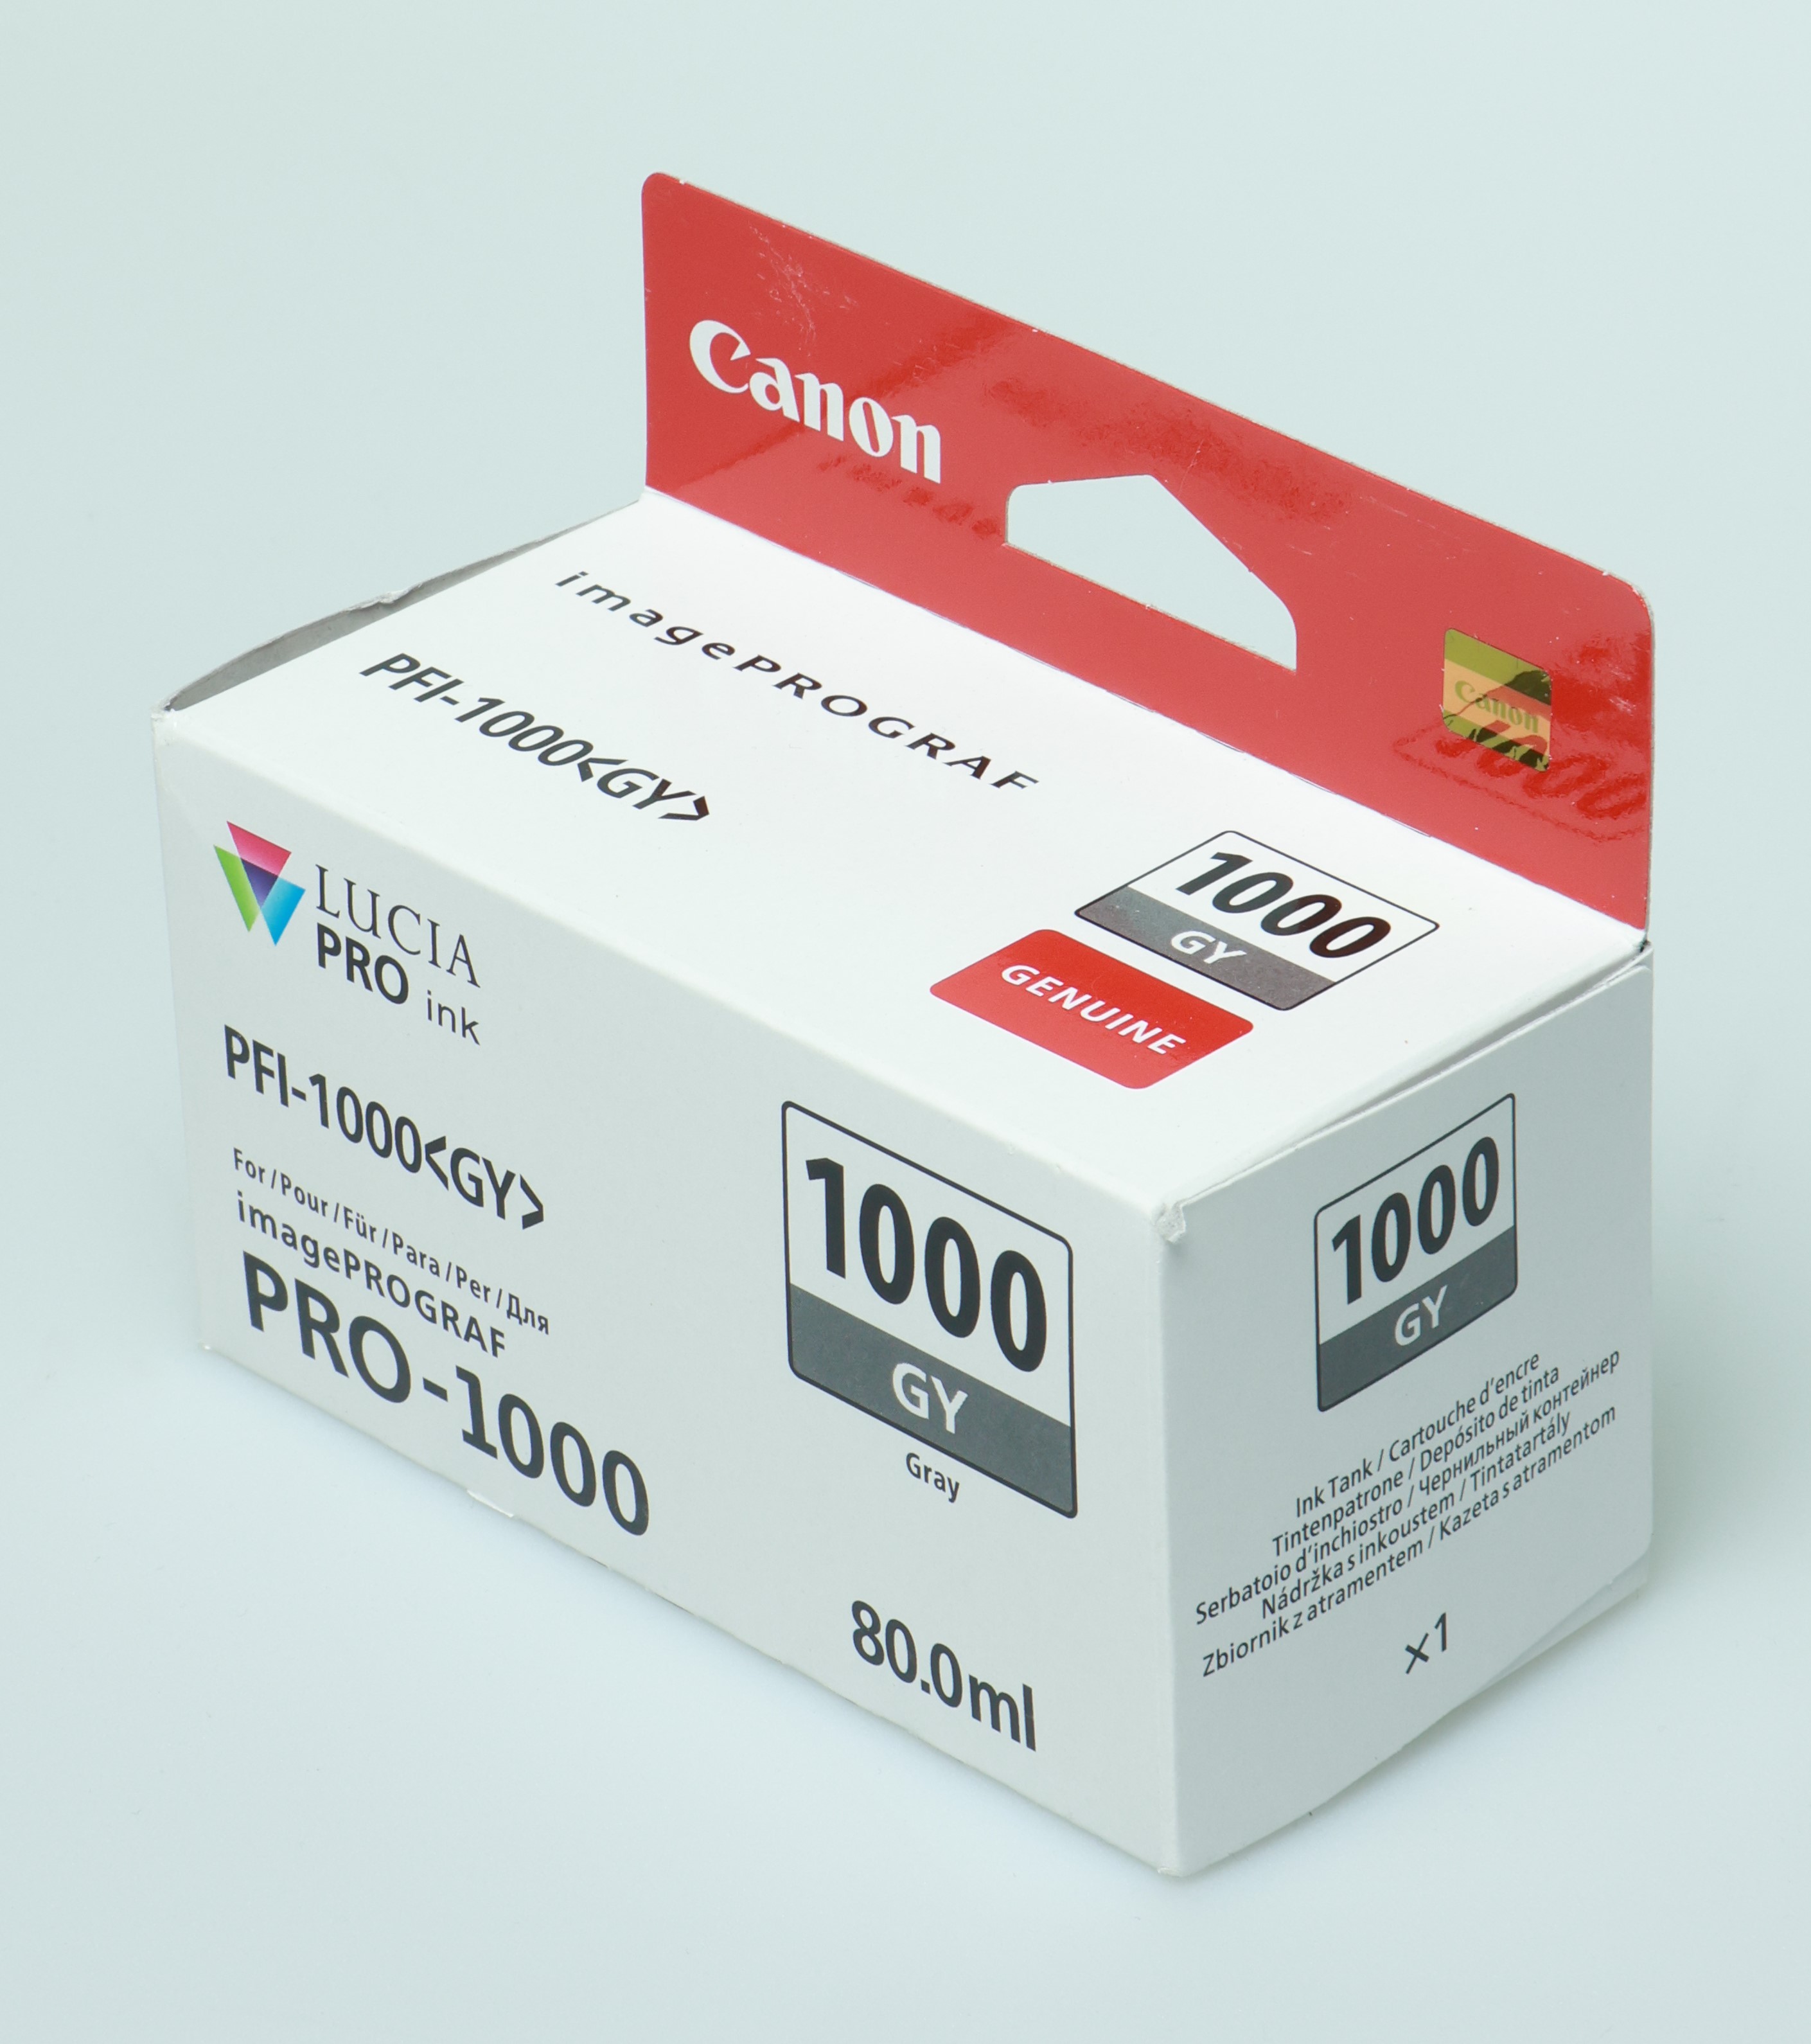 GY Gray, Canon professionel blæk til PRO 1000, 80 ml  